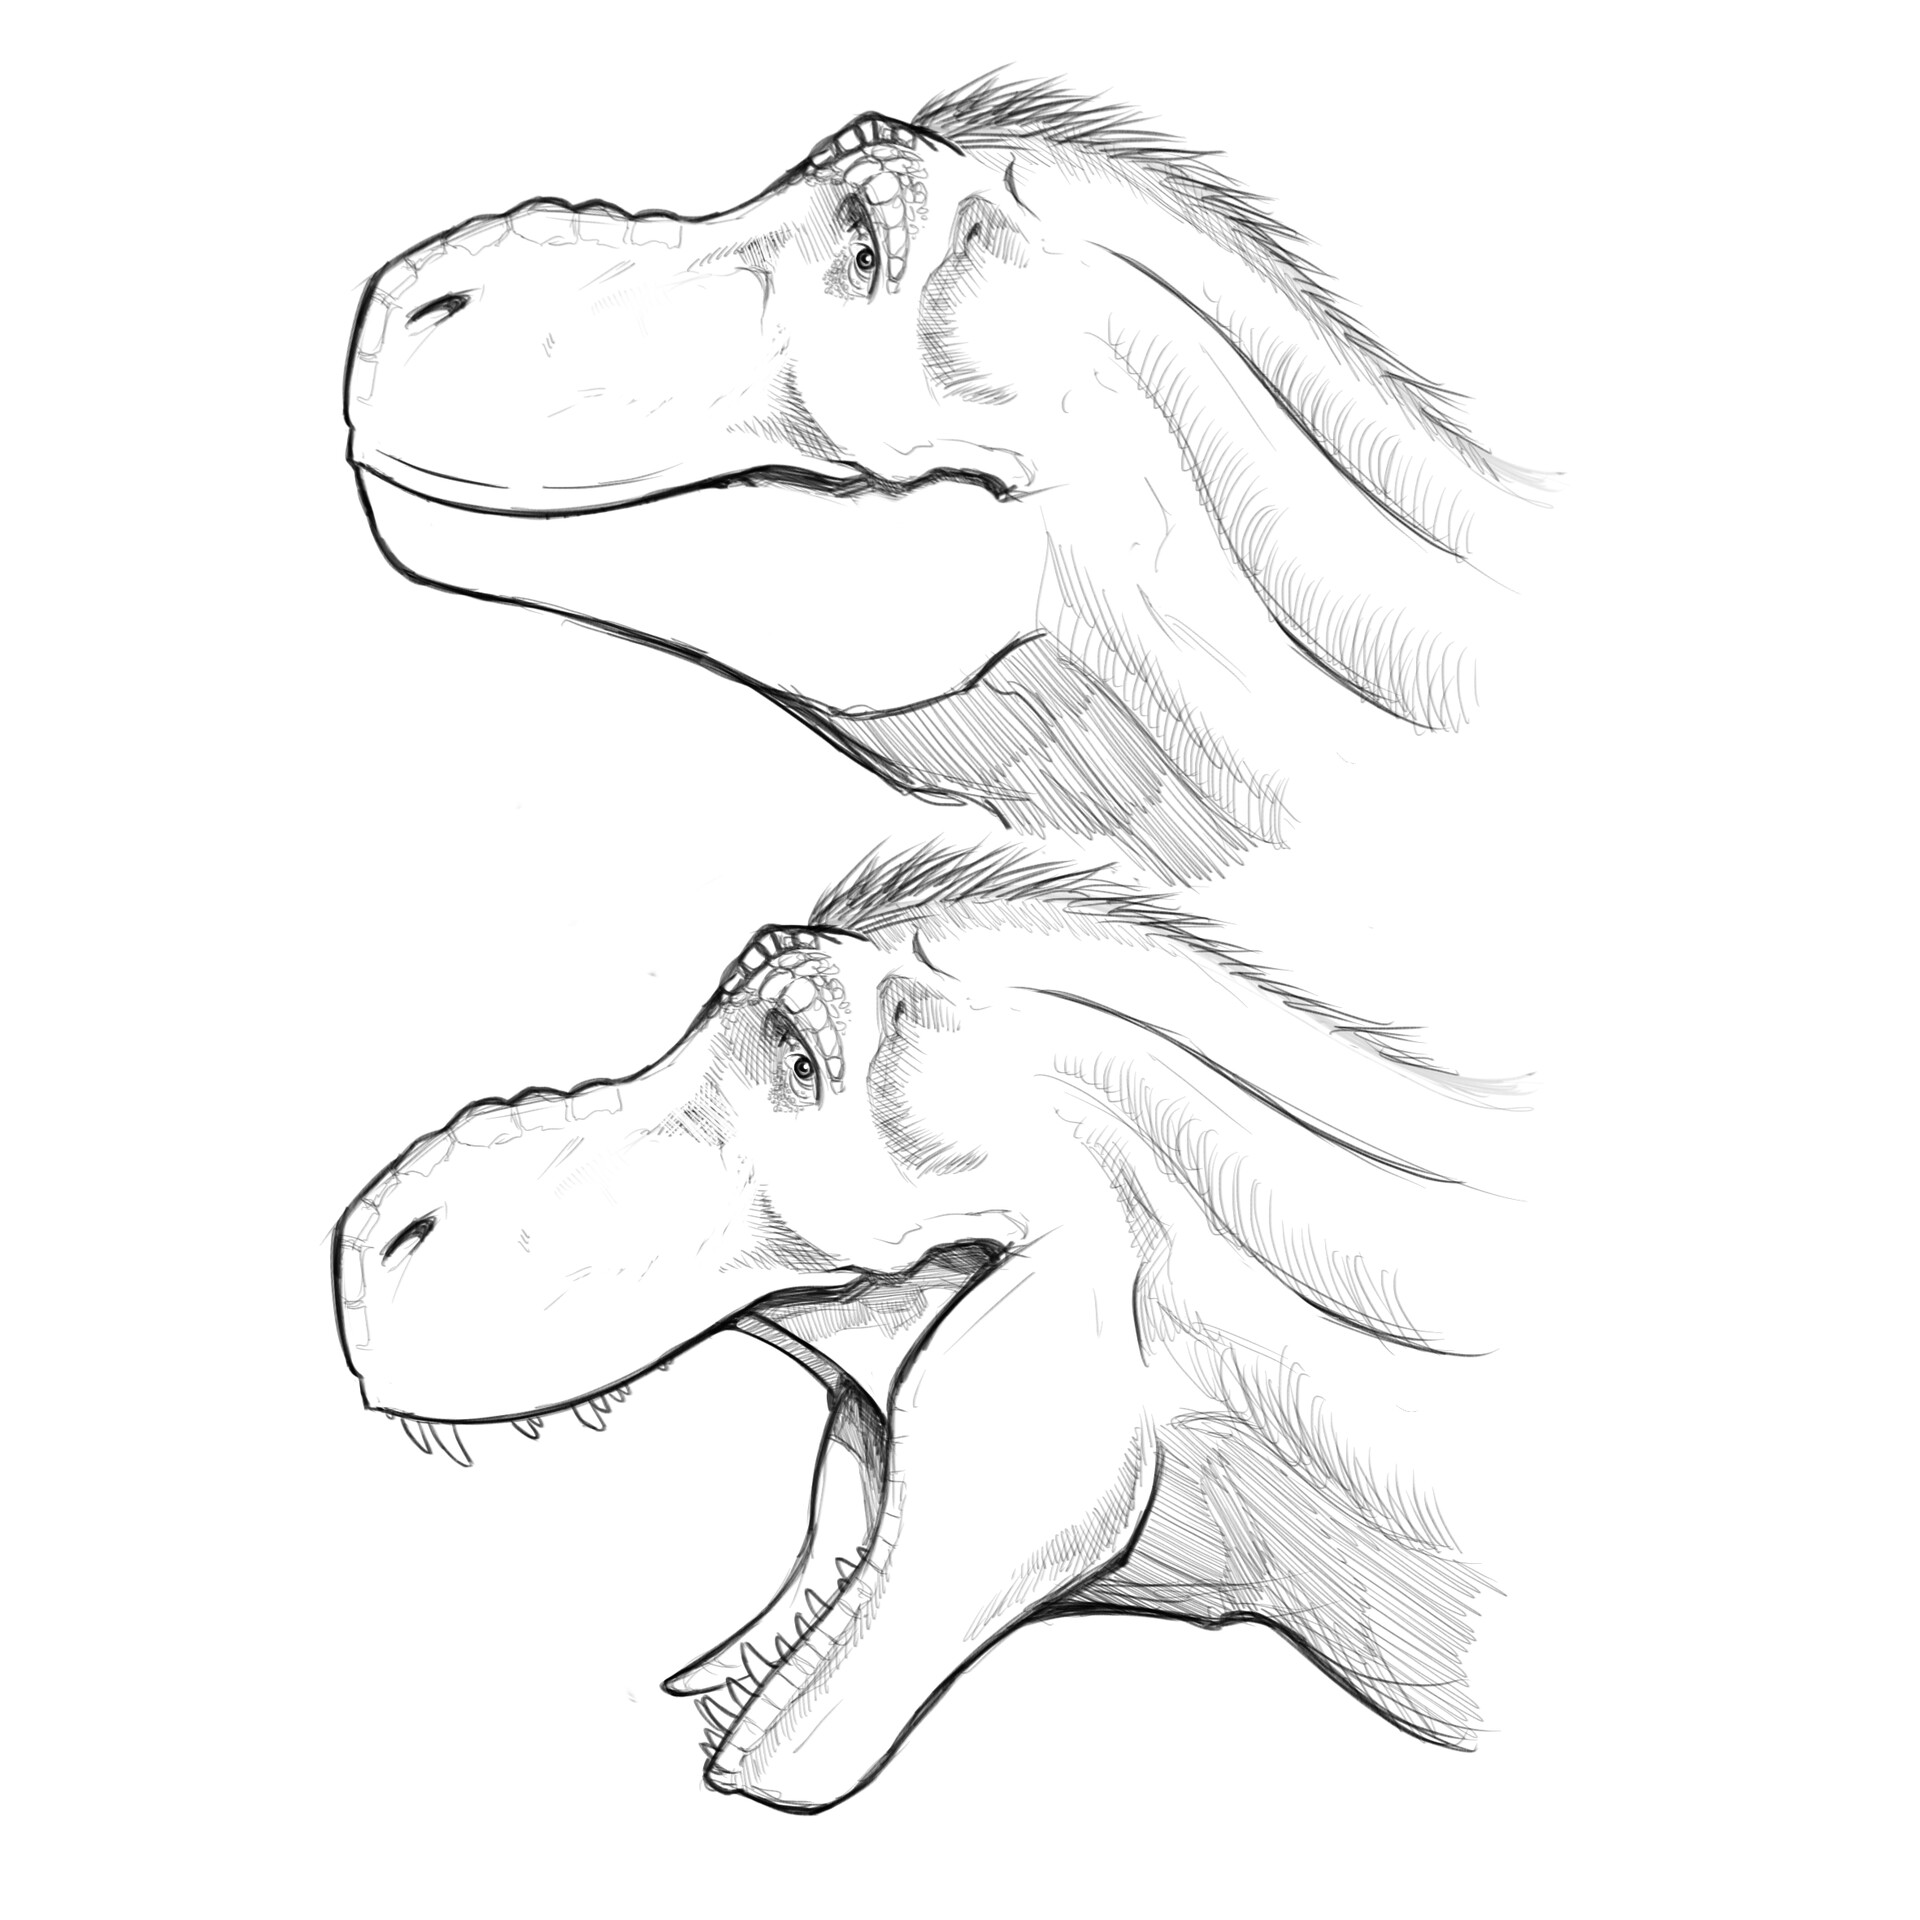 Tyrannosaurus rex head study animated by Demigod64 on DeviantArt